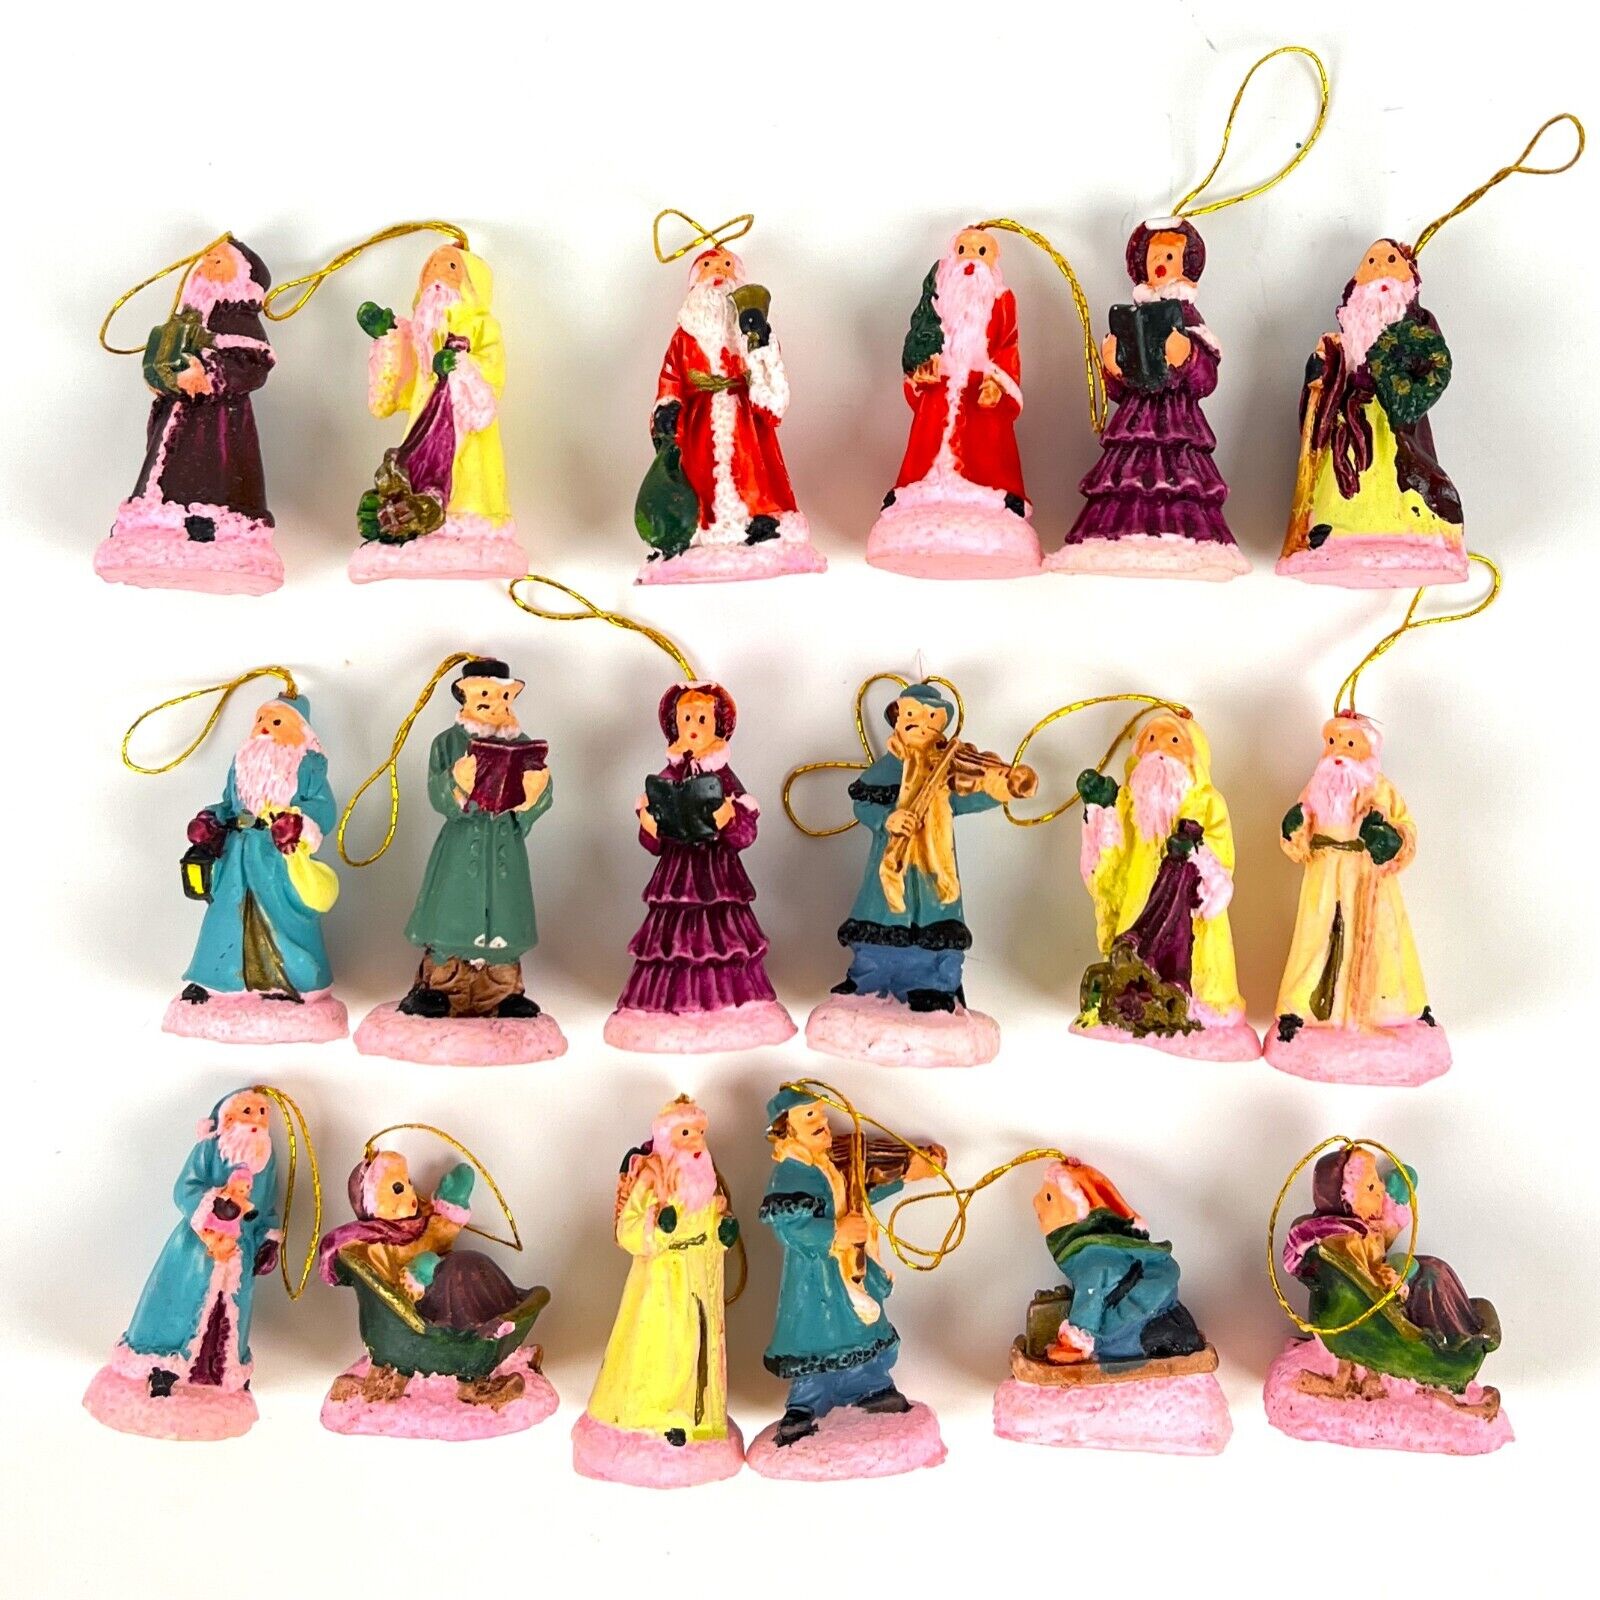 VTG Victorian Miniature Figurines Christmas tree ornaments Set of 18